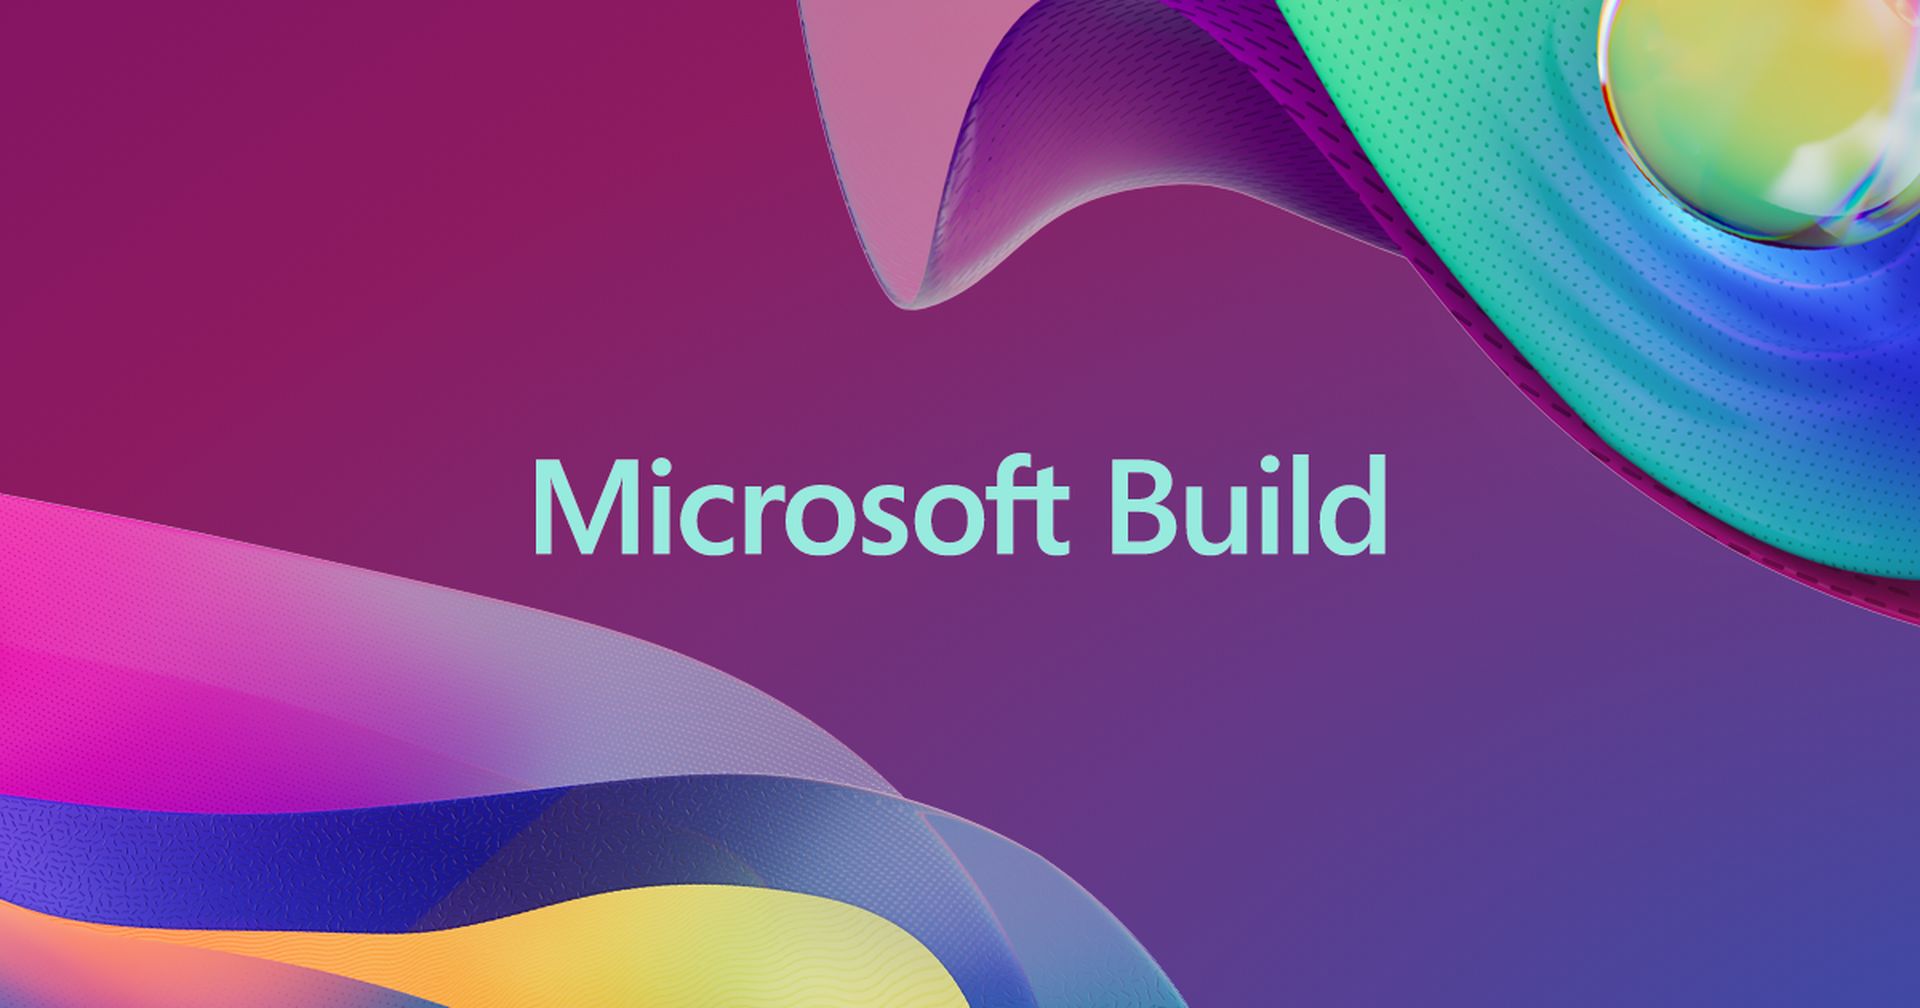 Sneak peek: wat is de volgende stap van Microsoft?